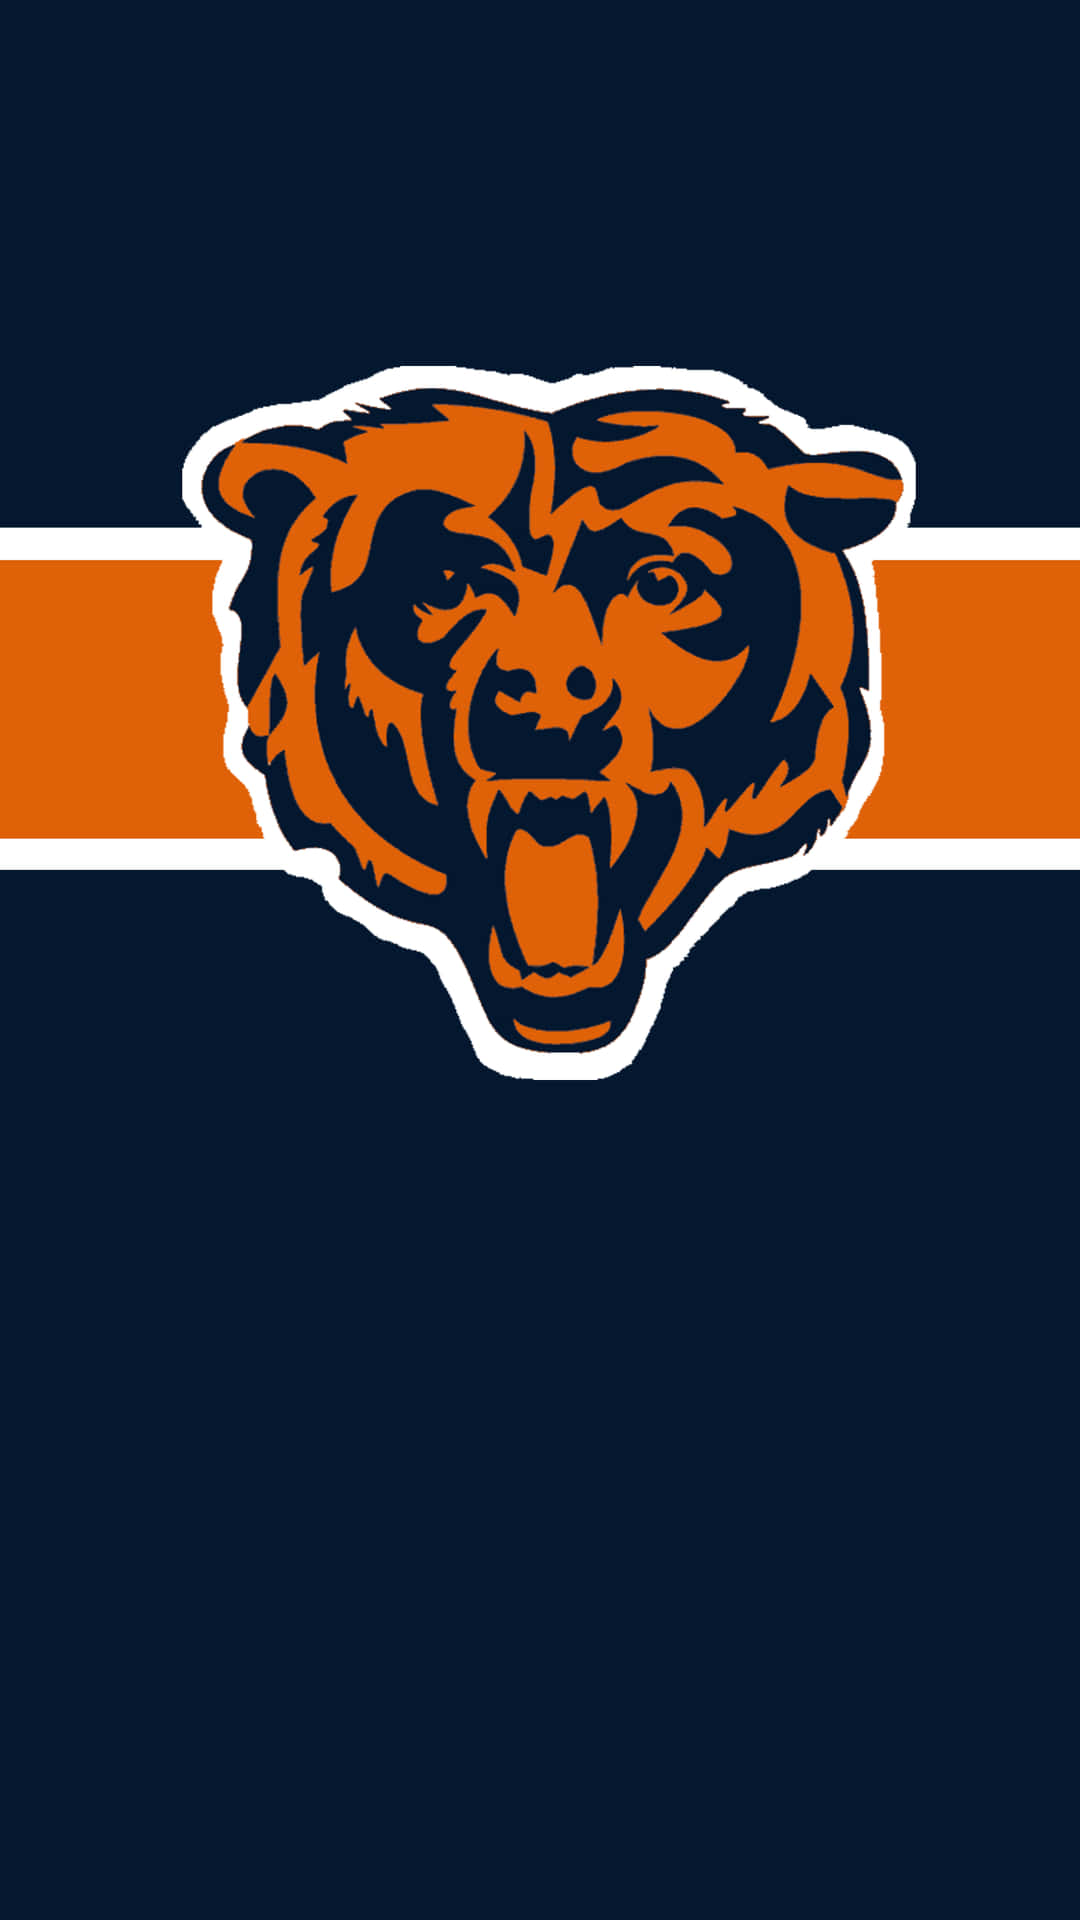 Chicago Bears Logo On A Dark Background Wallpaper